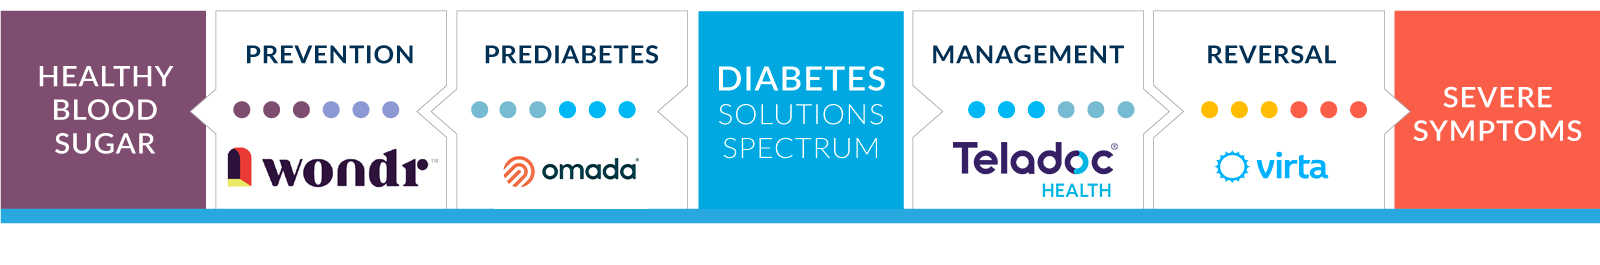 diabetes solutions spectrum